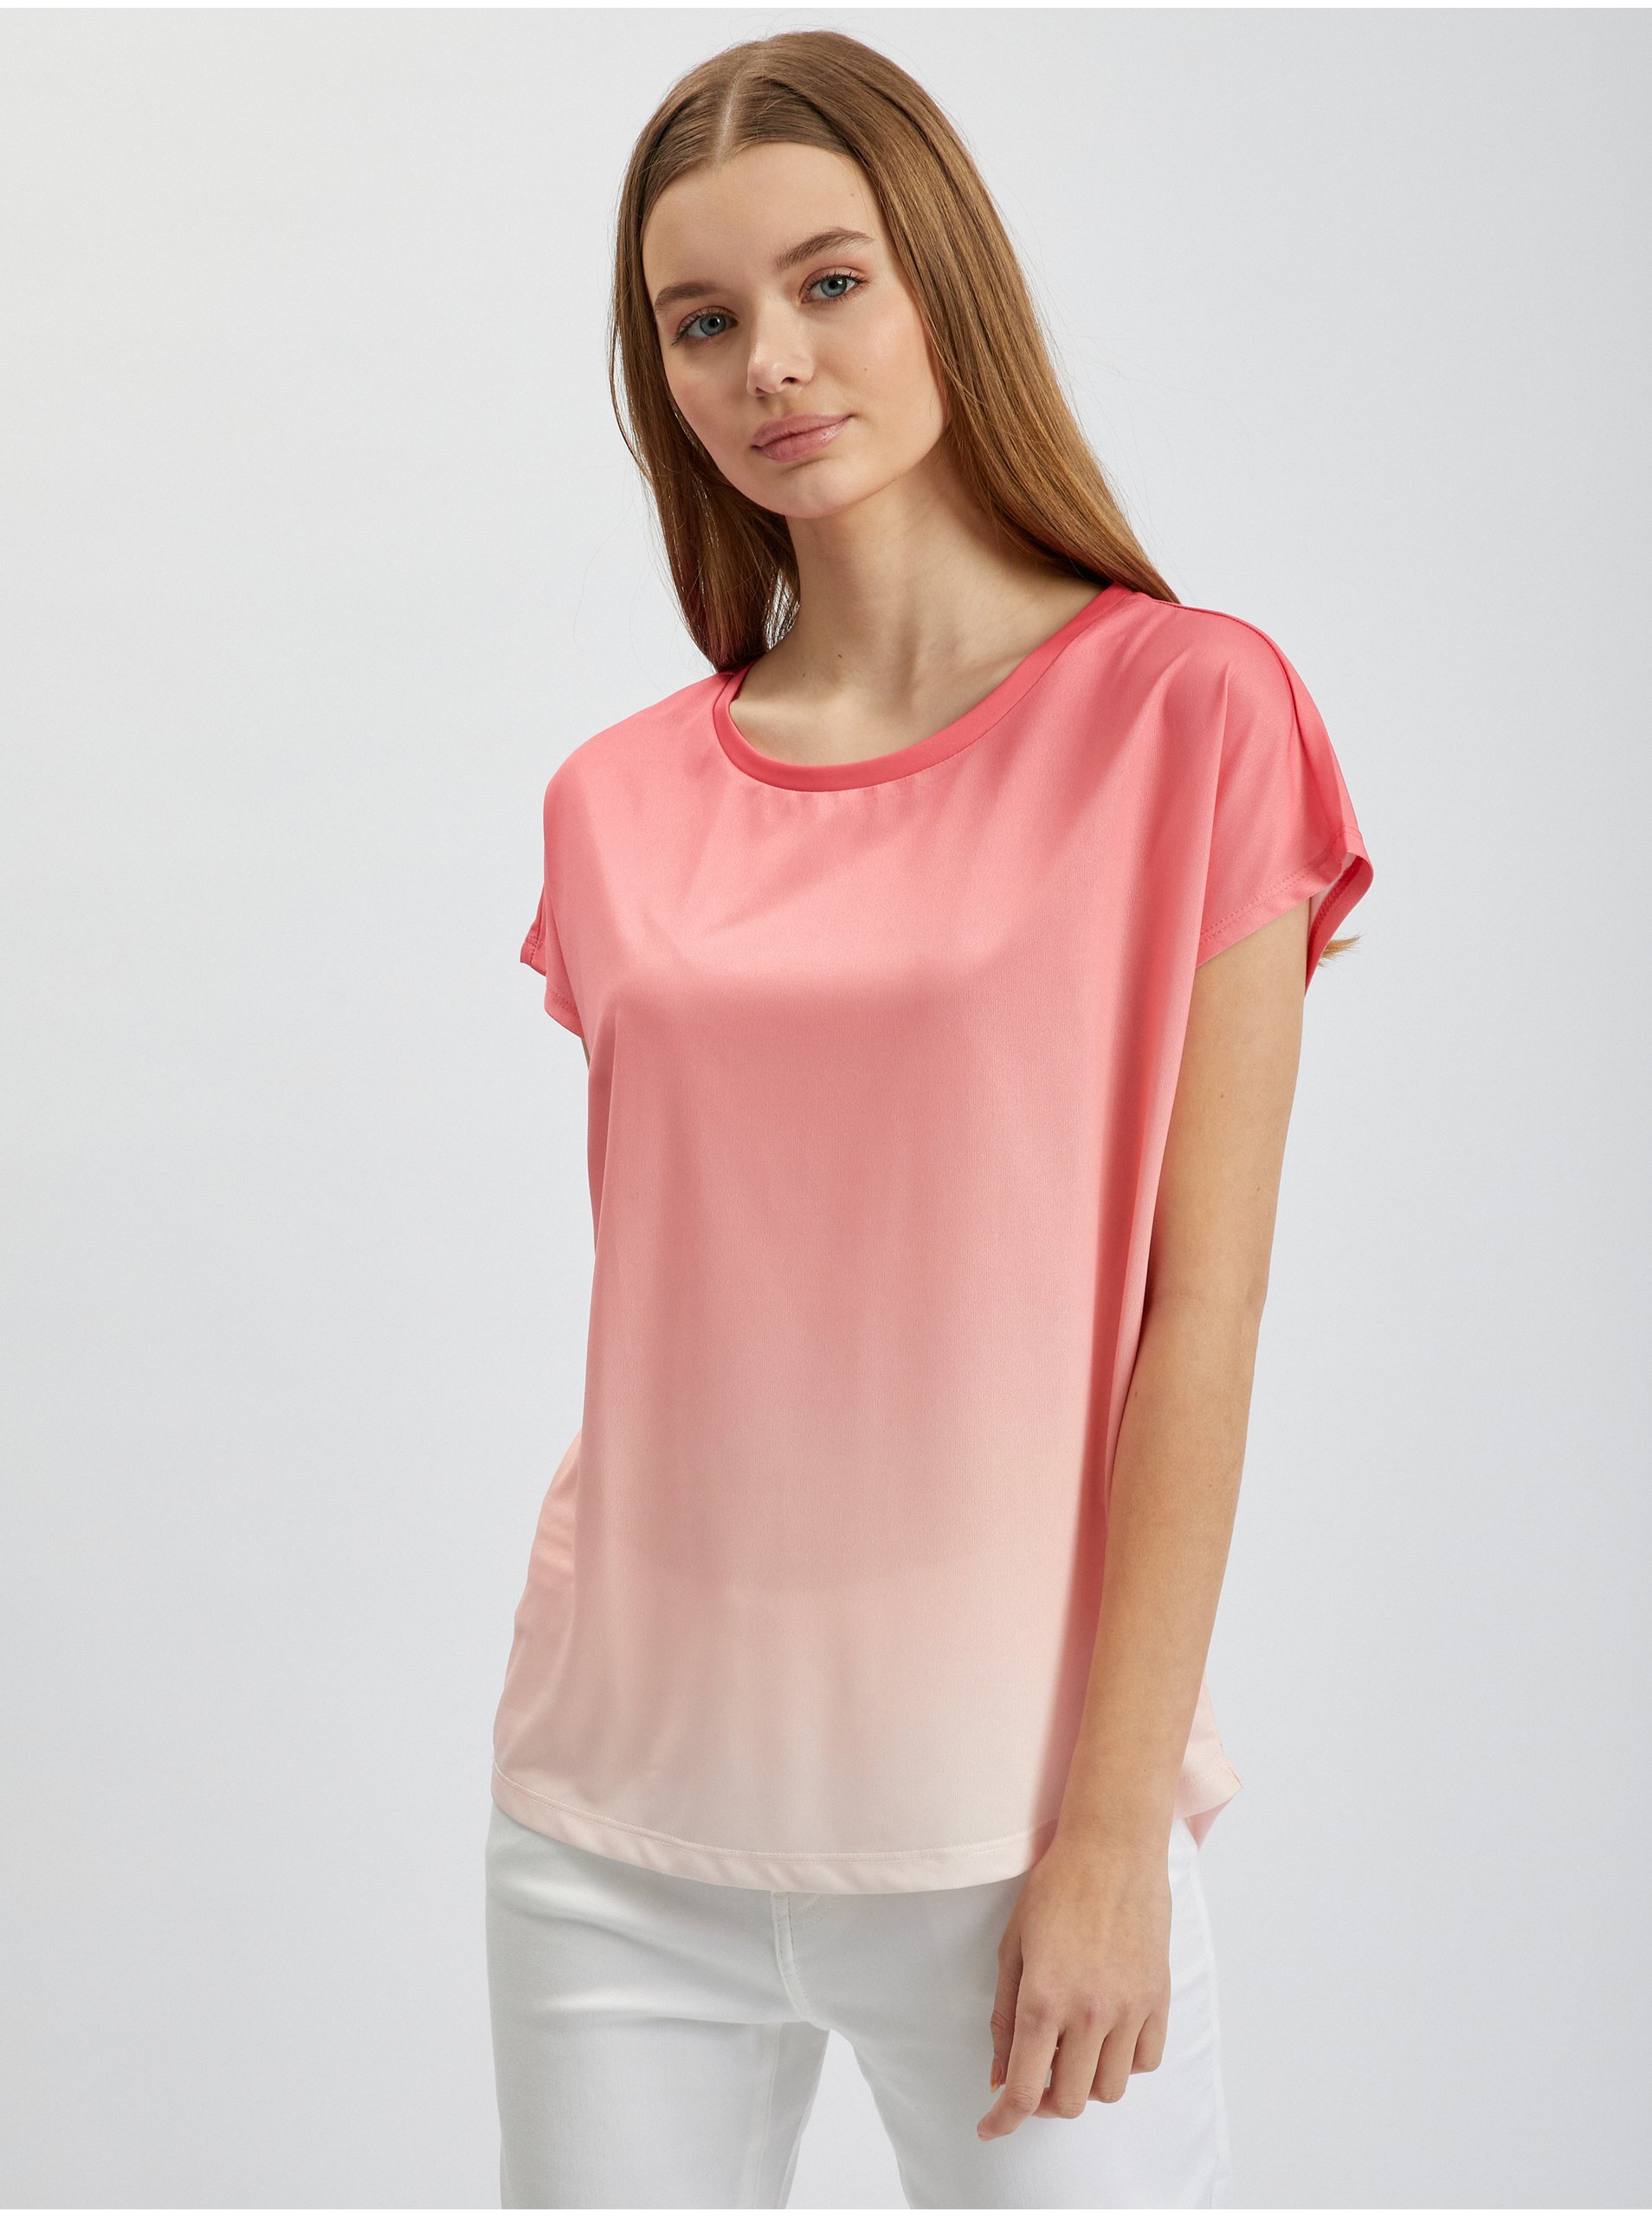 Orsay Pink Womens T-Shirt - Women